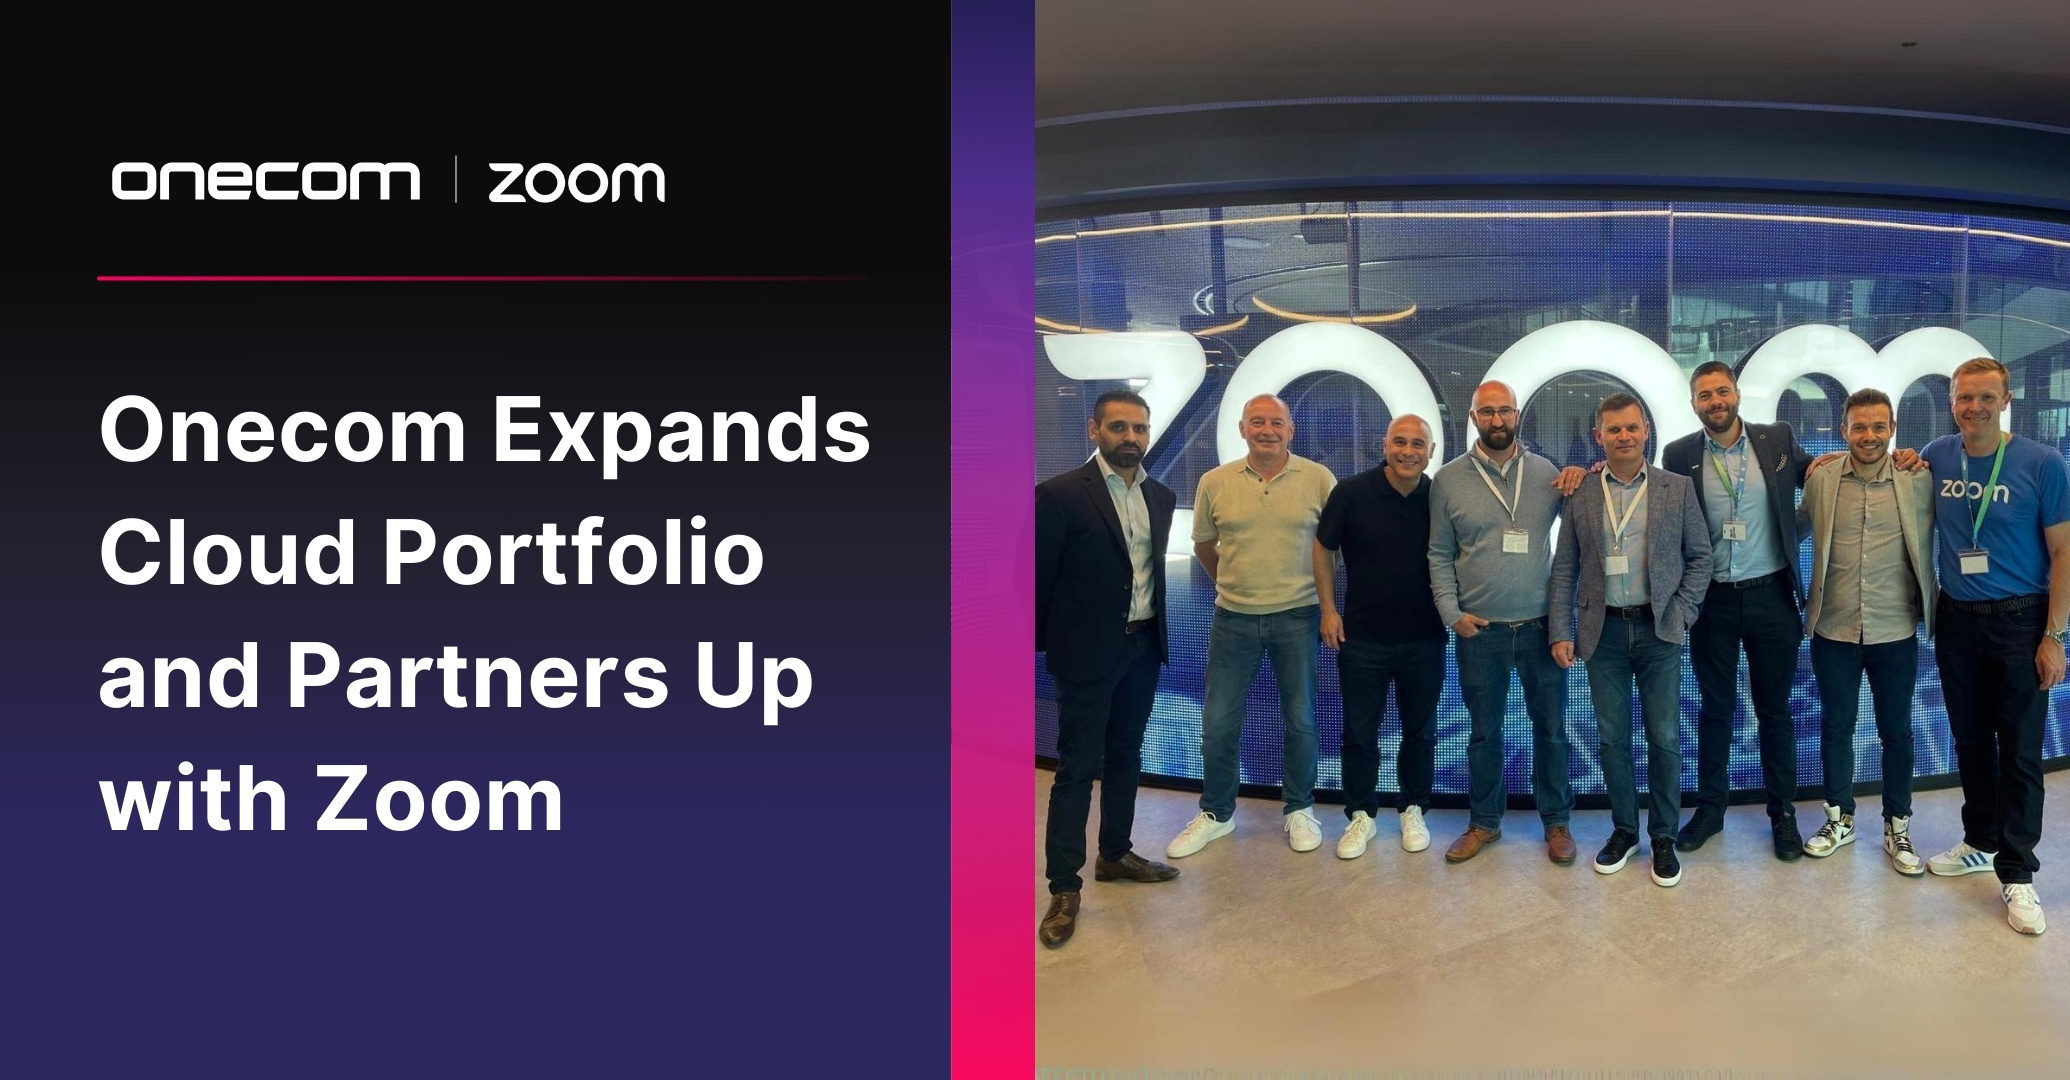 Onecom Expands Cloud Portfolio and Teams Up with Zoom